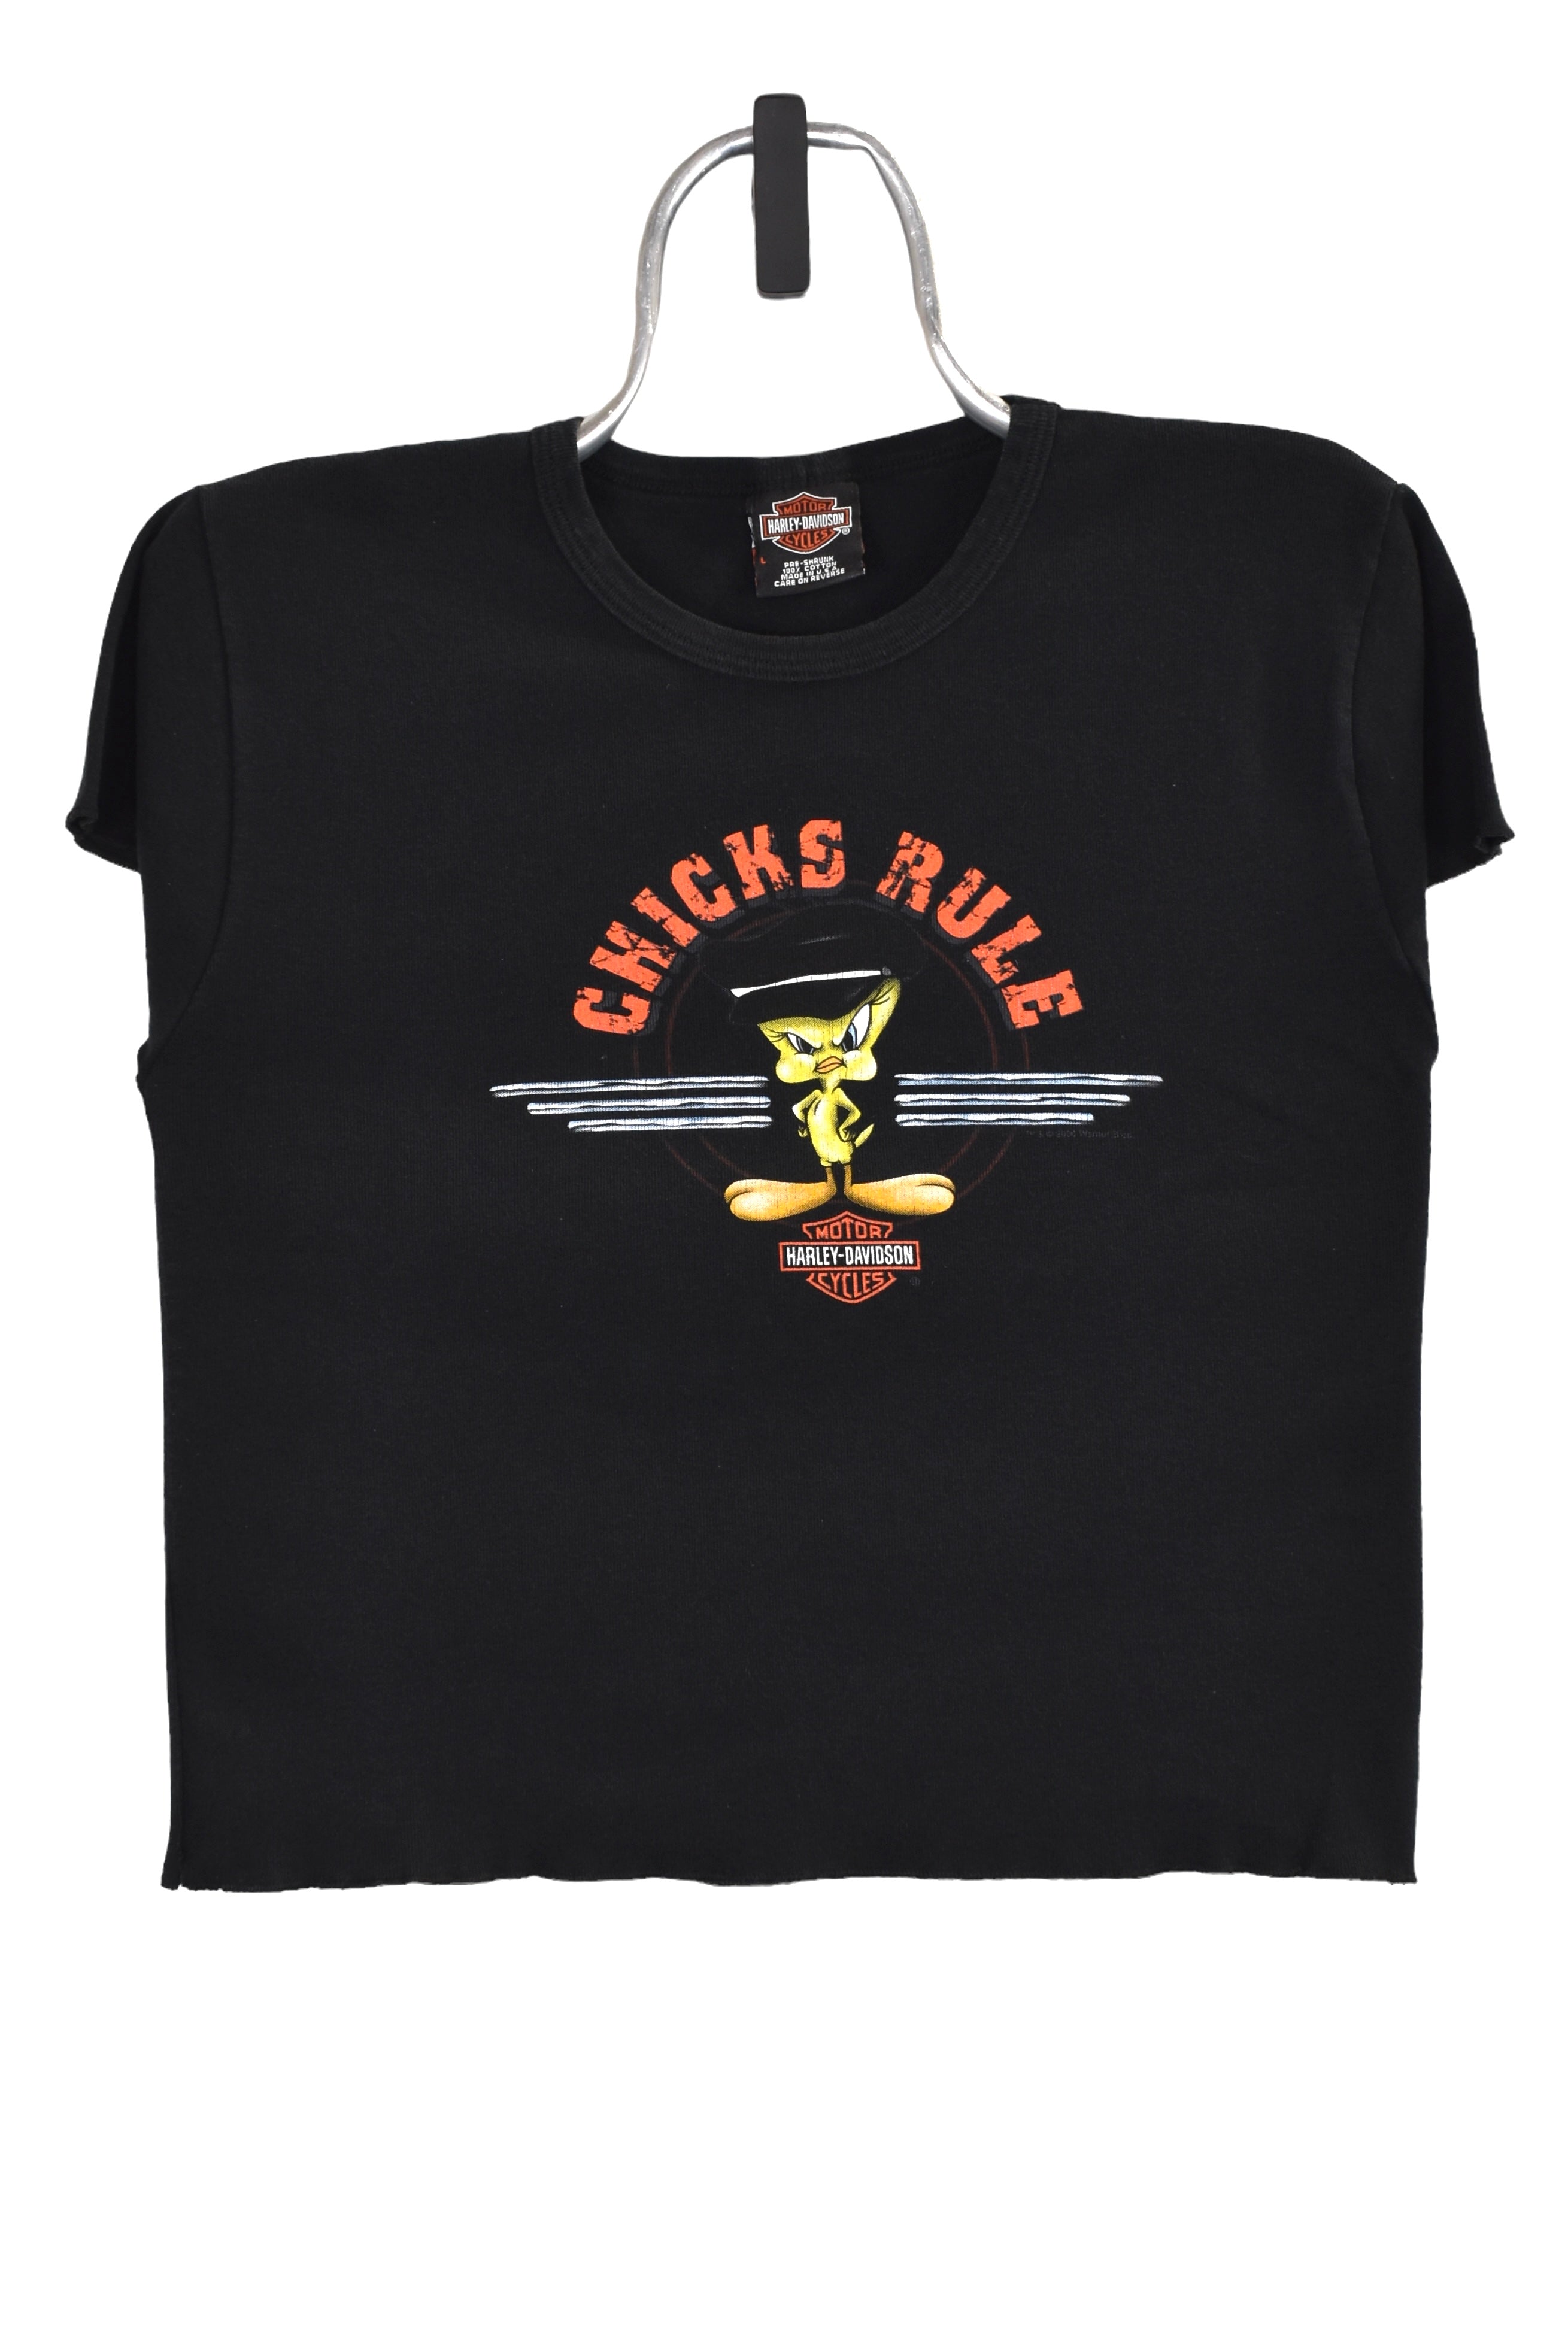 Shop Vintage T-Shirts Online